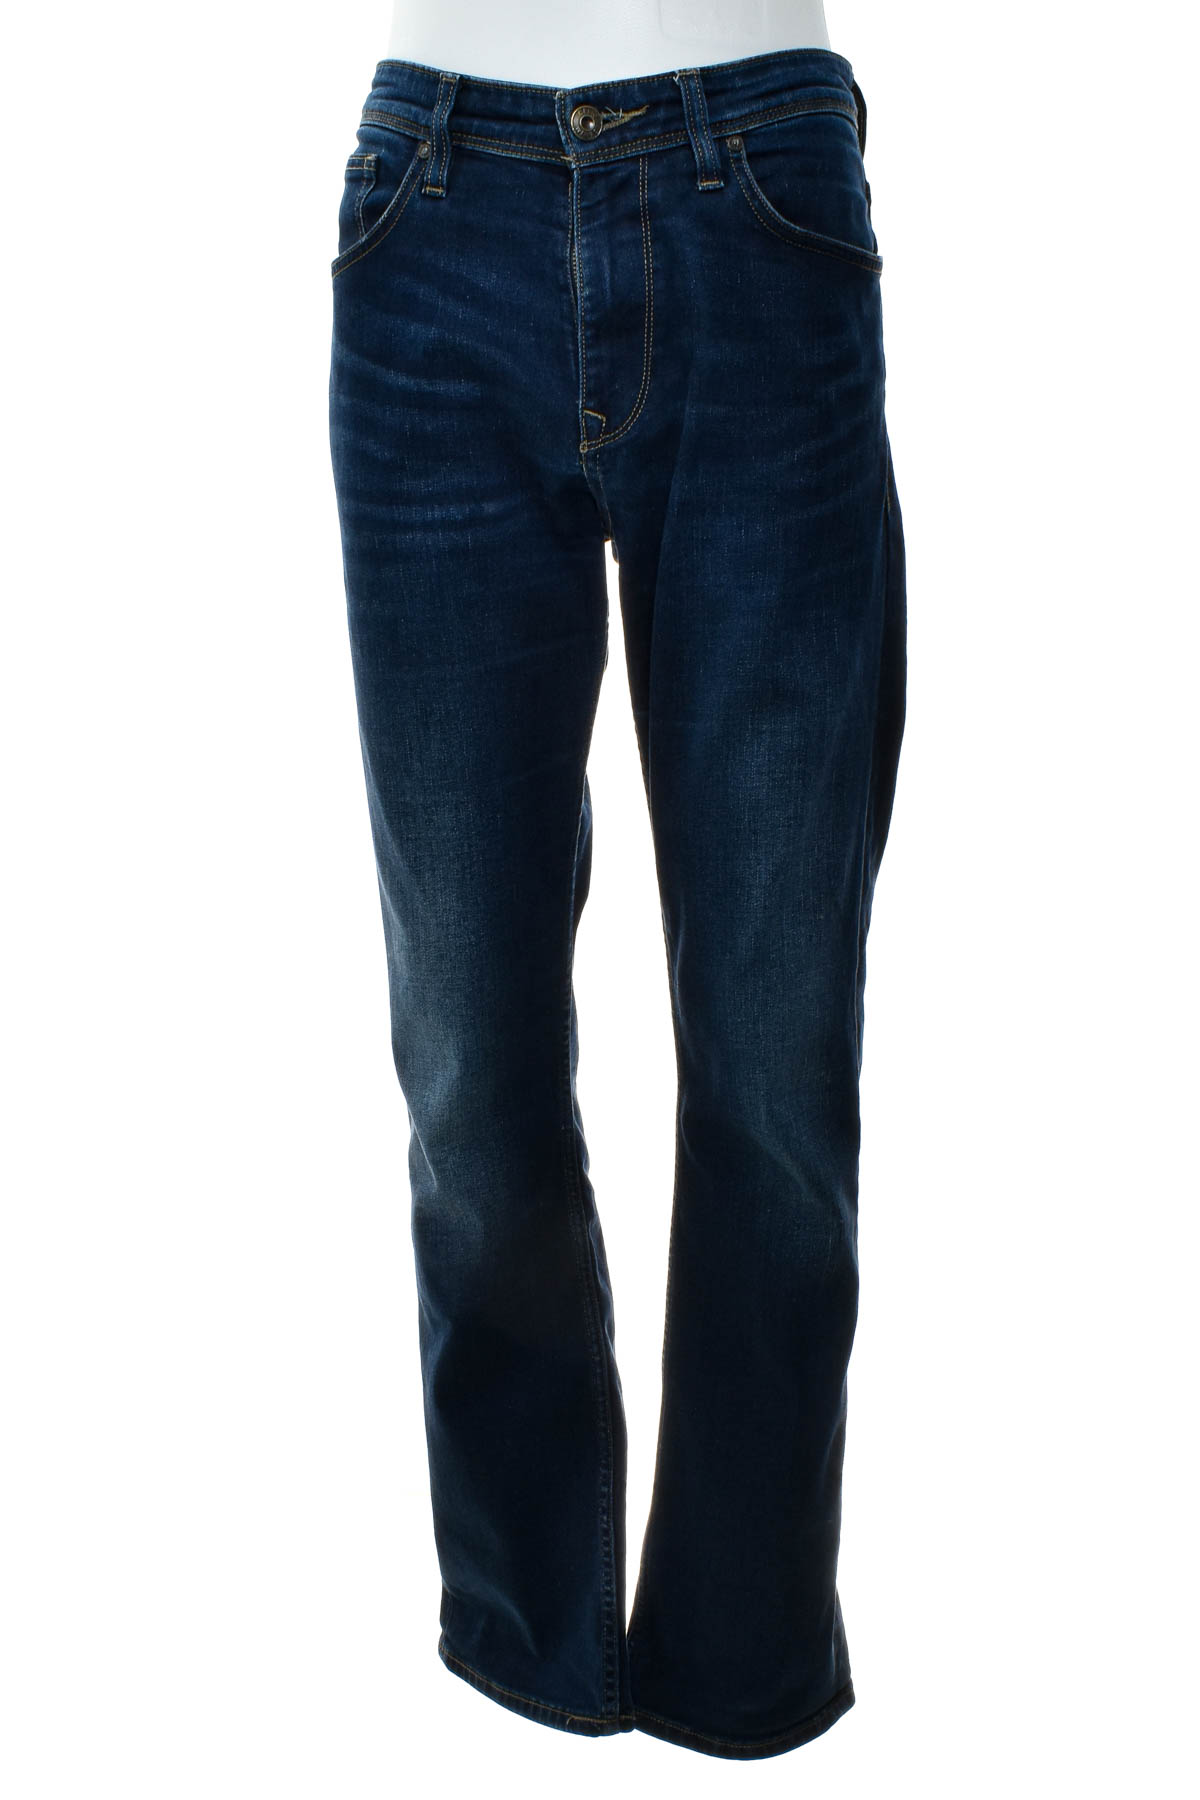 Men's jeans - Celio - 0